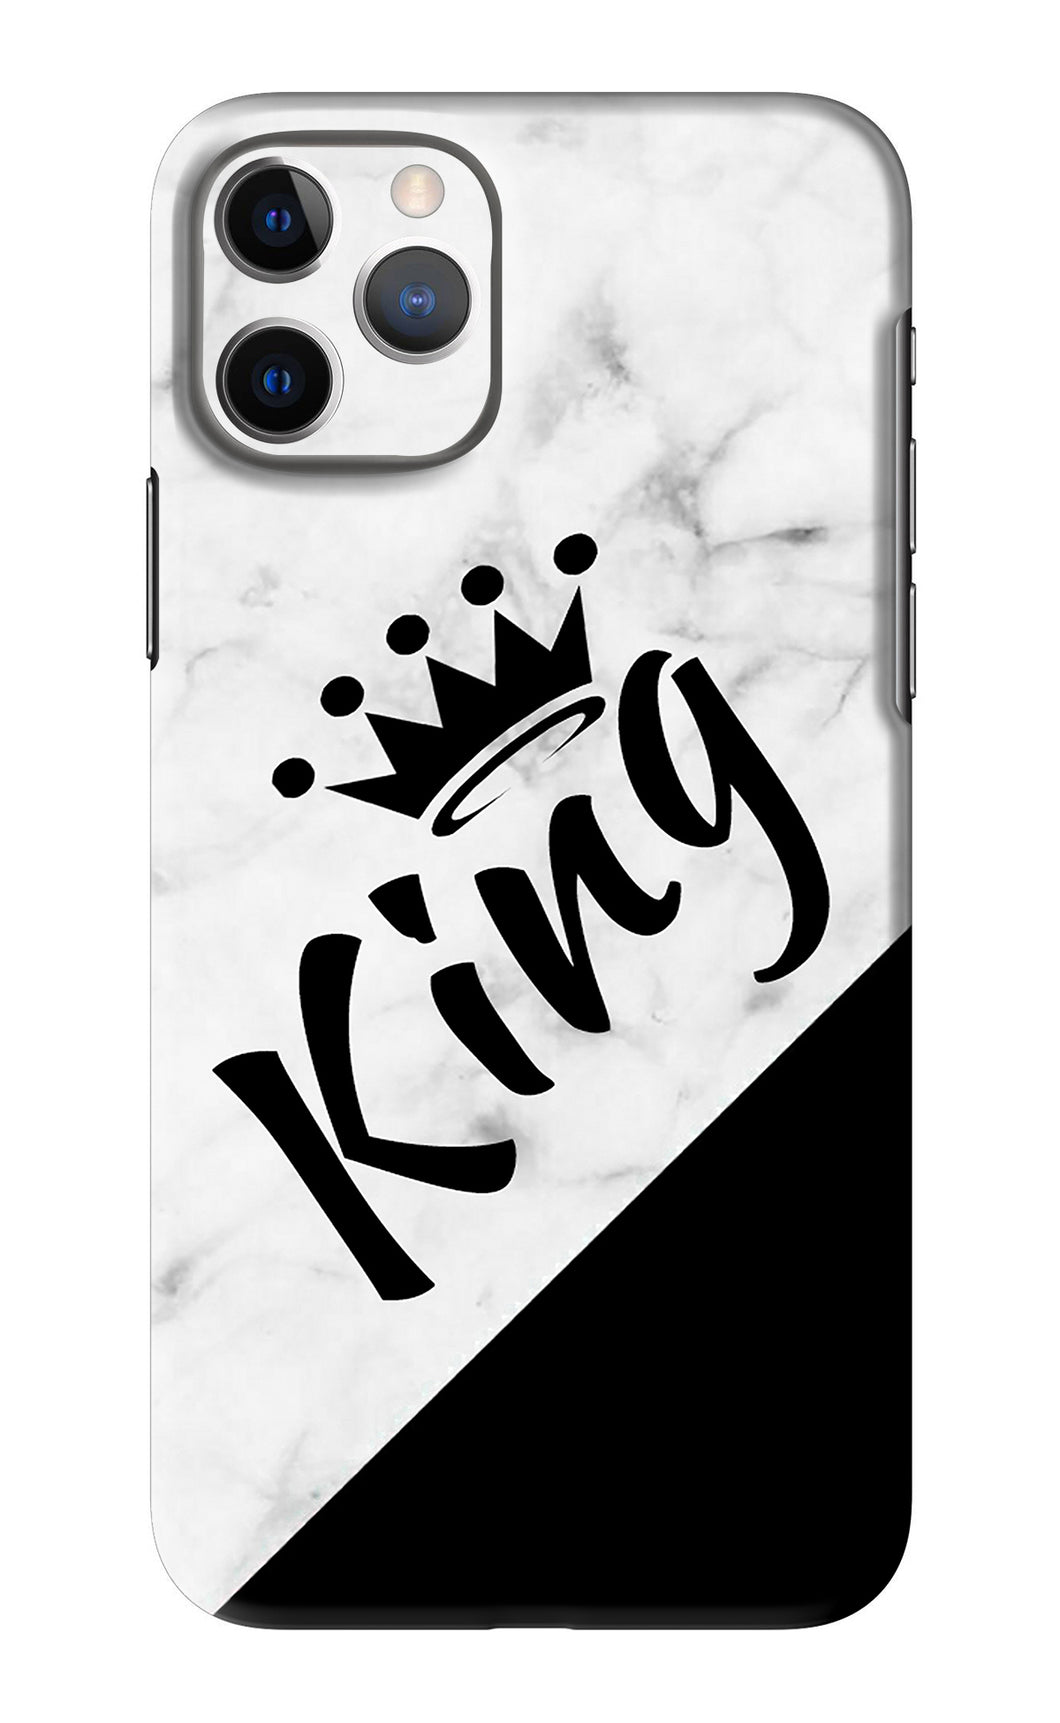 King iPhone 11 Pro Back Skin Wrap